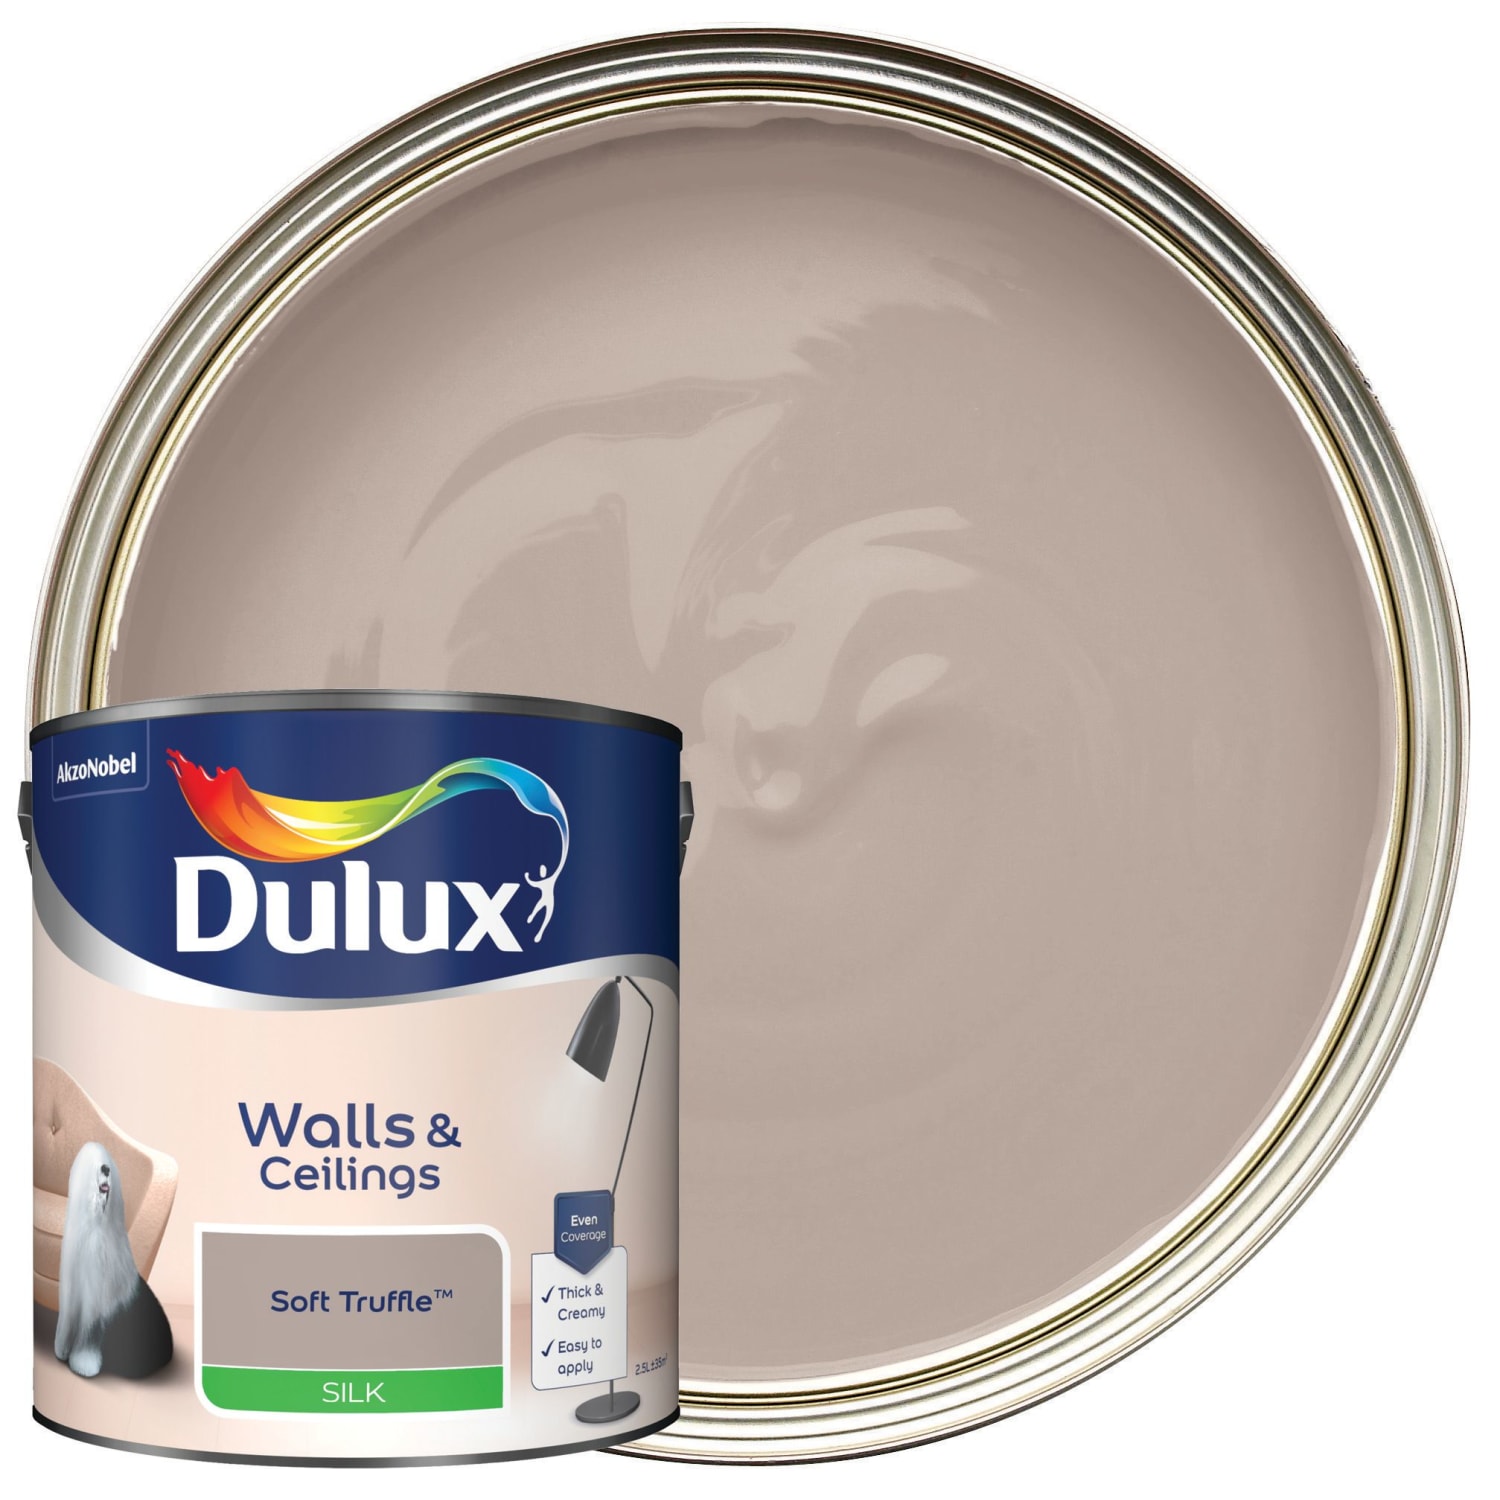 Dulux Walls & ceilings Willow tree Matt Emulsion paint, 2.5L